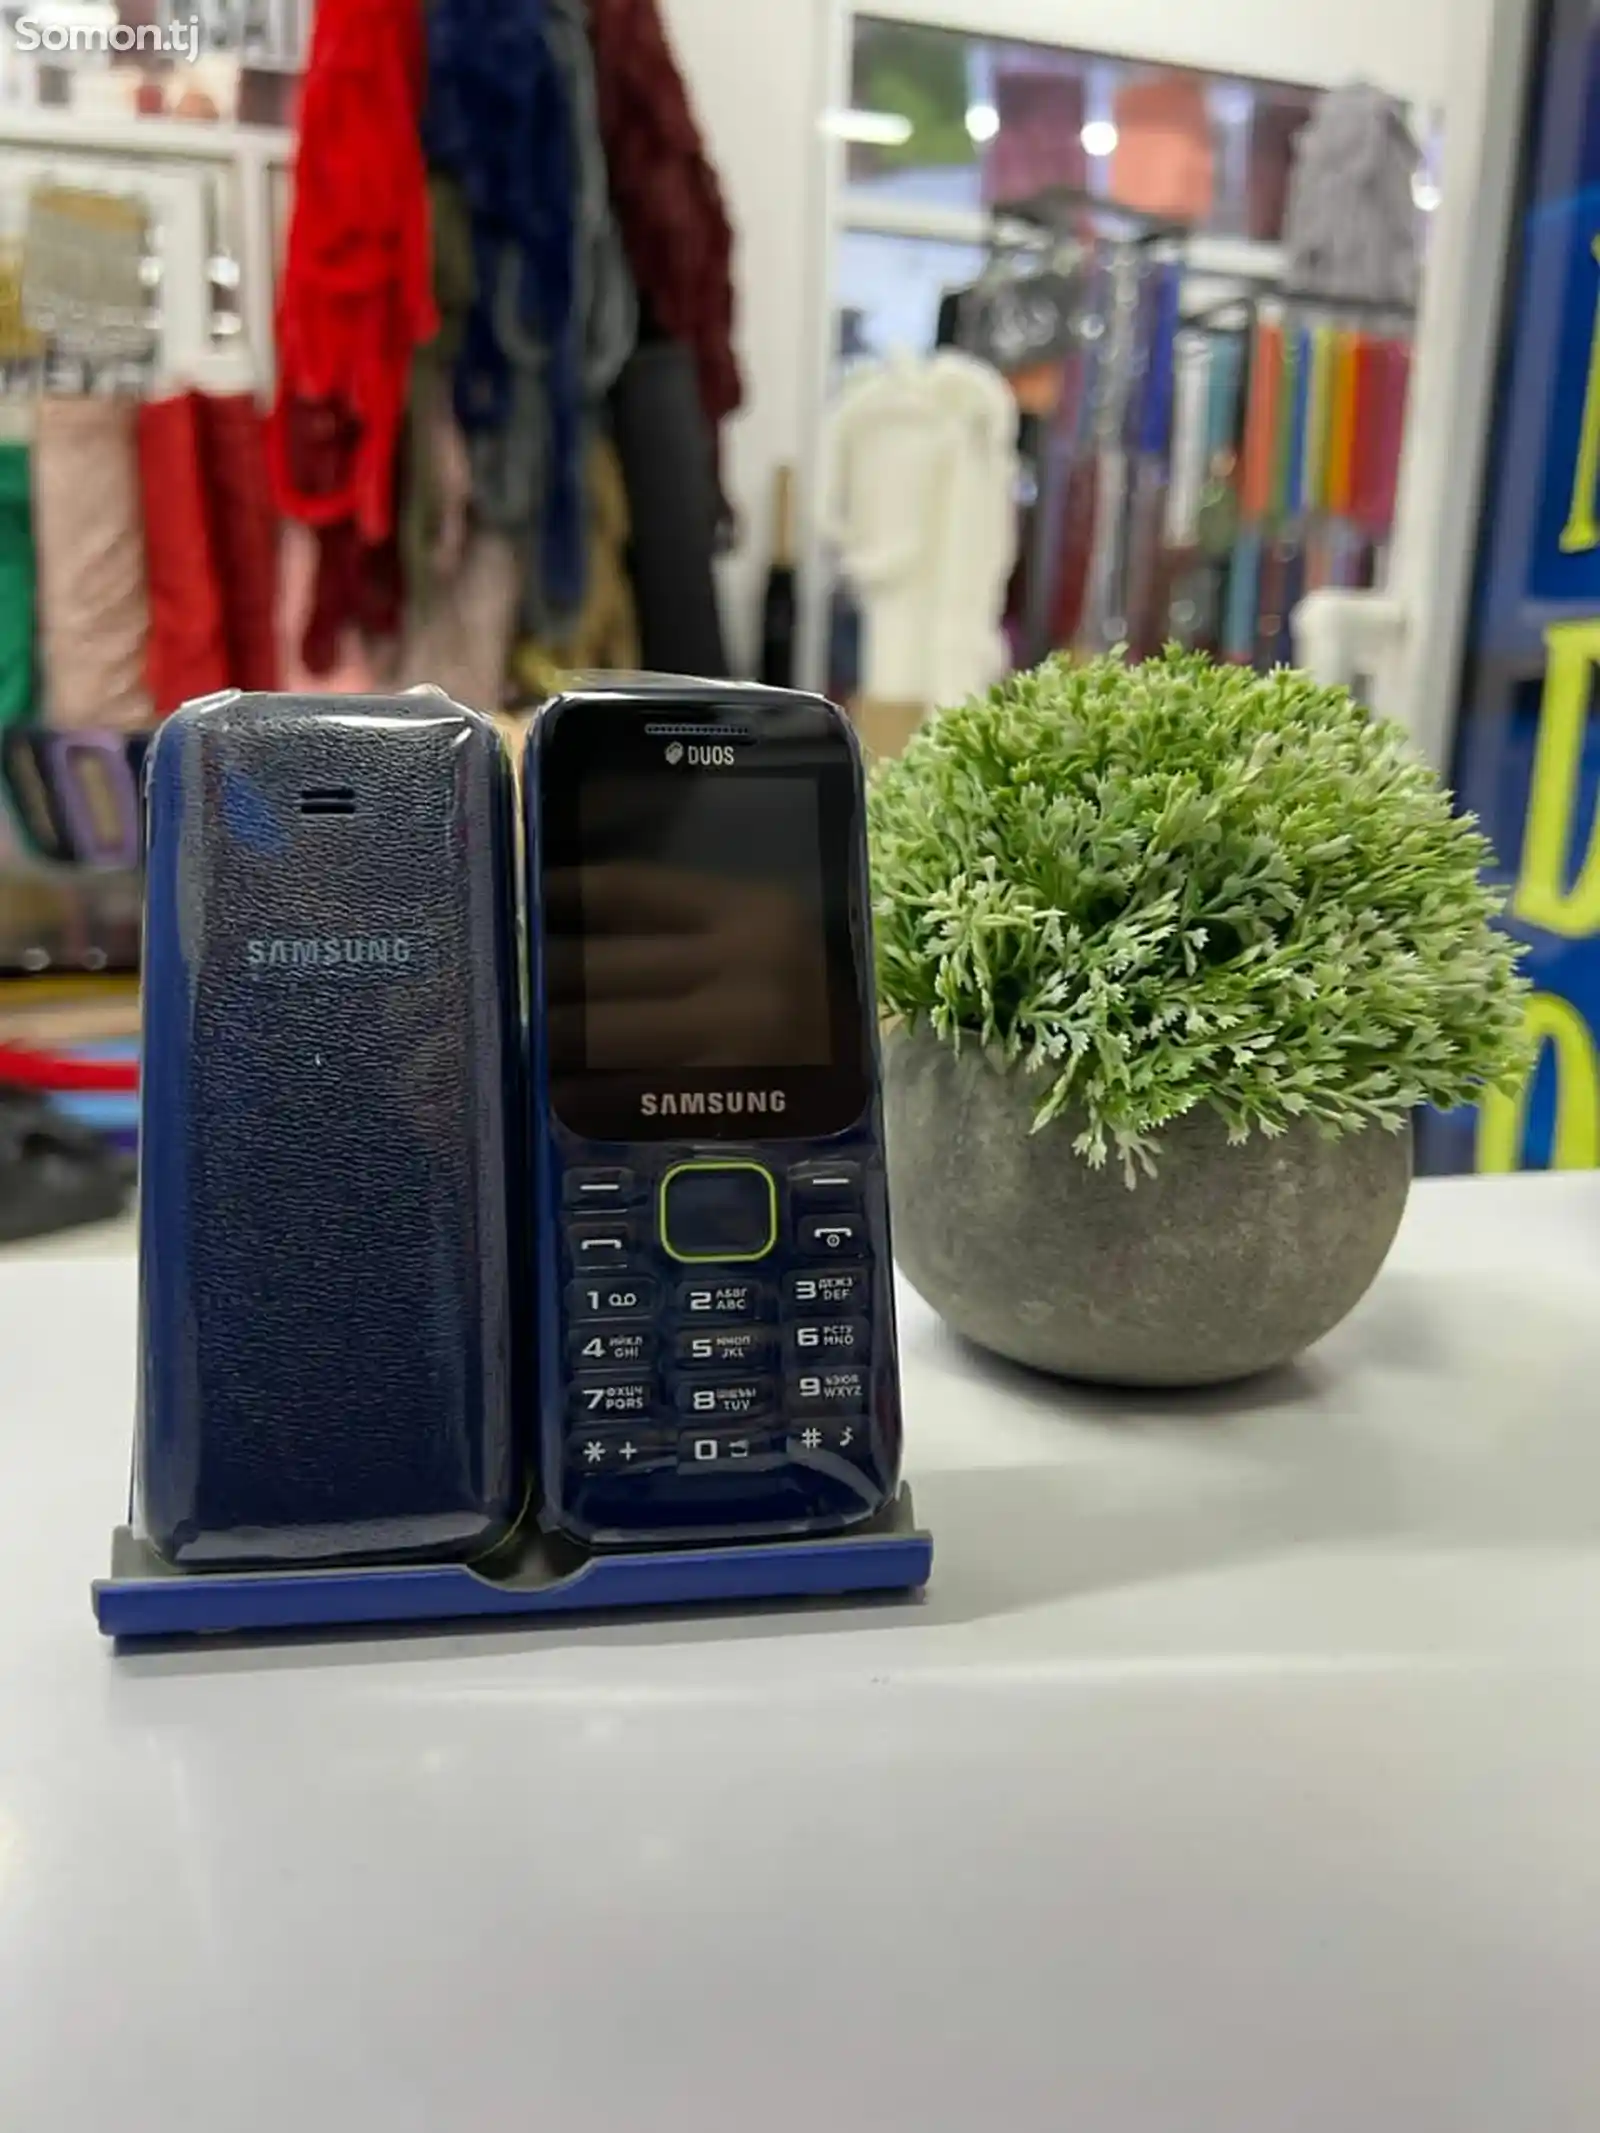 Samsung B310 duos